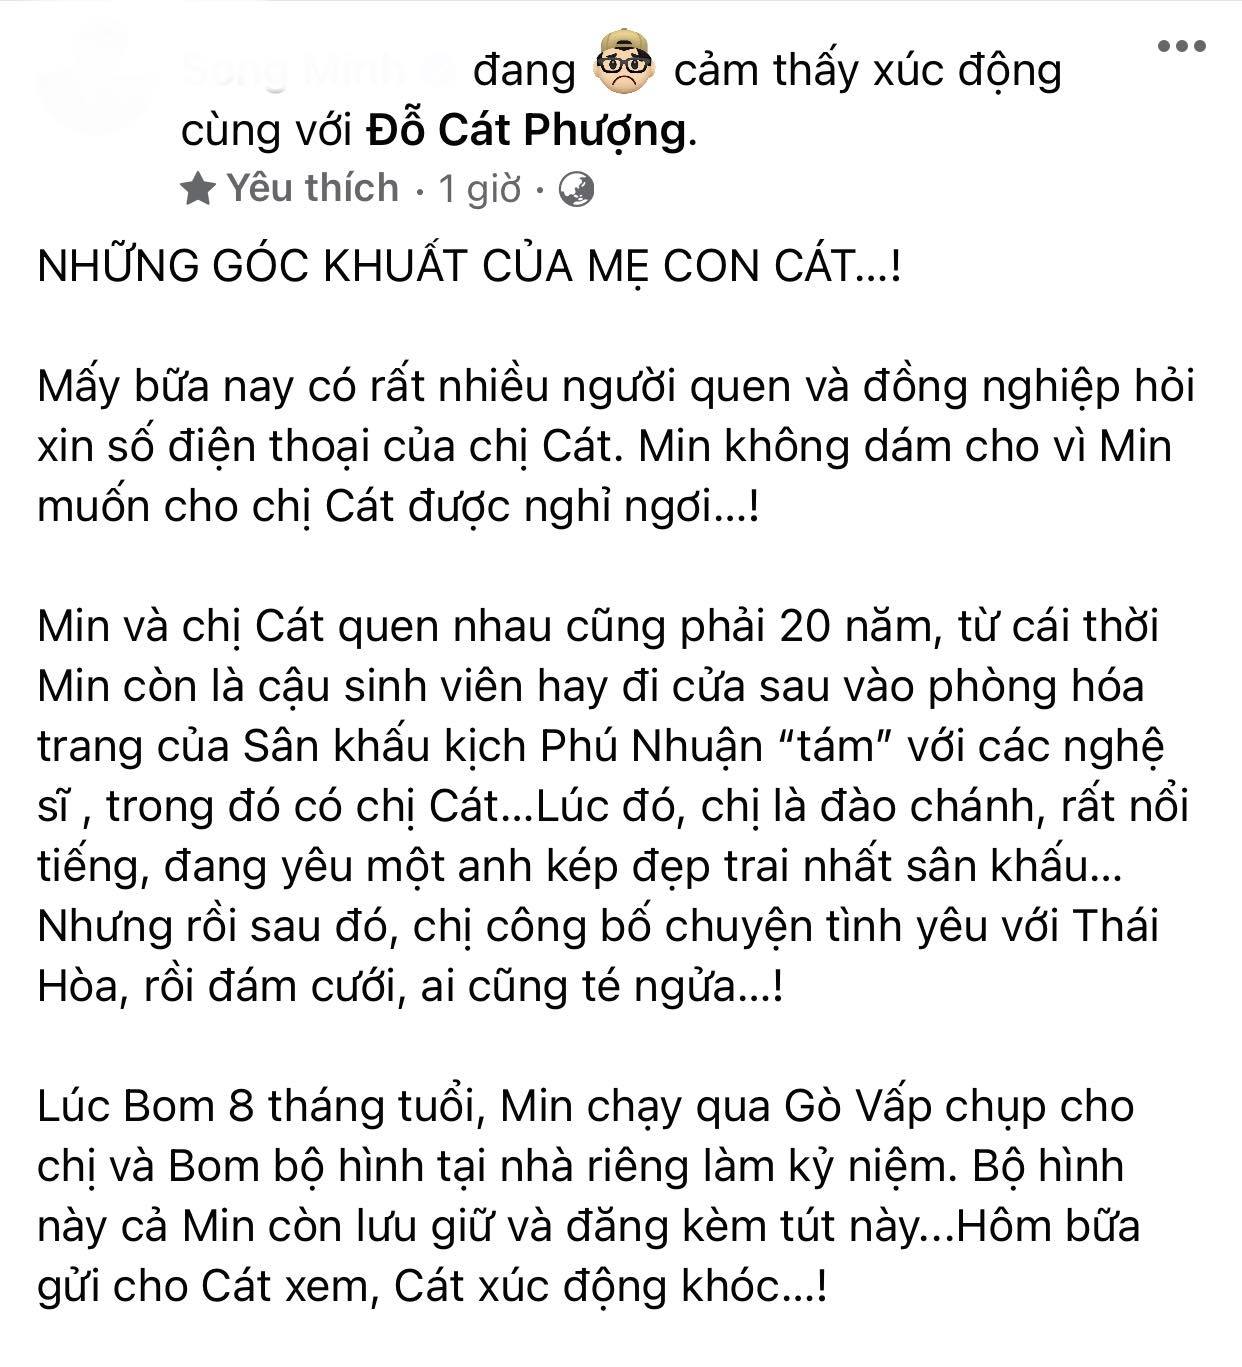 Nguoi-ban-than-20-nam-he-lo-nhung-goc-khuat-ve-cat-phuong-gui-thang-loi-nhan-den-kieu-minh-tuan-1